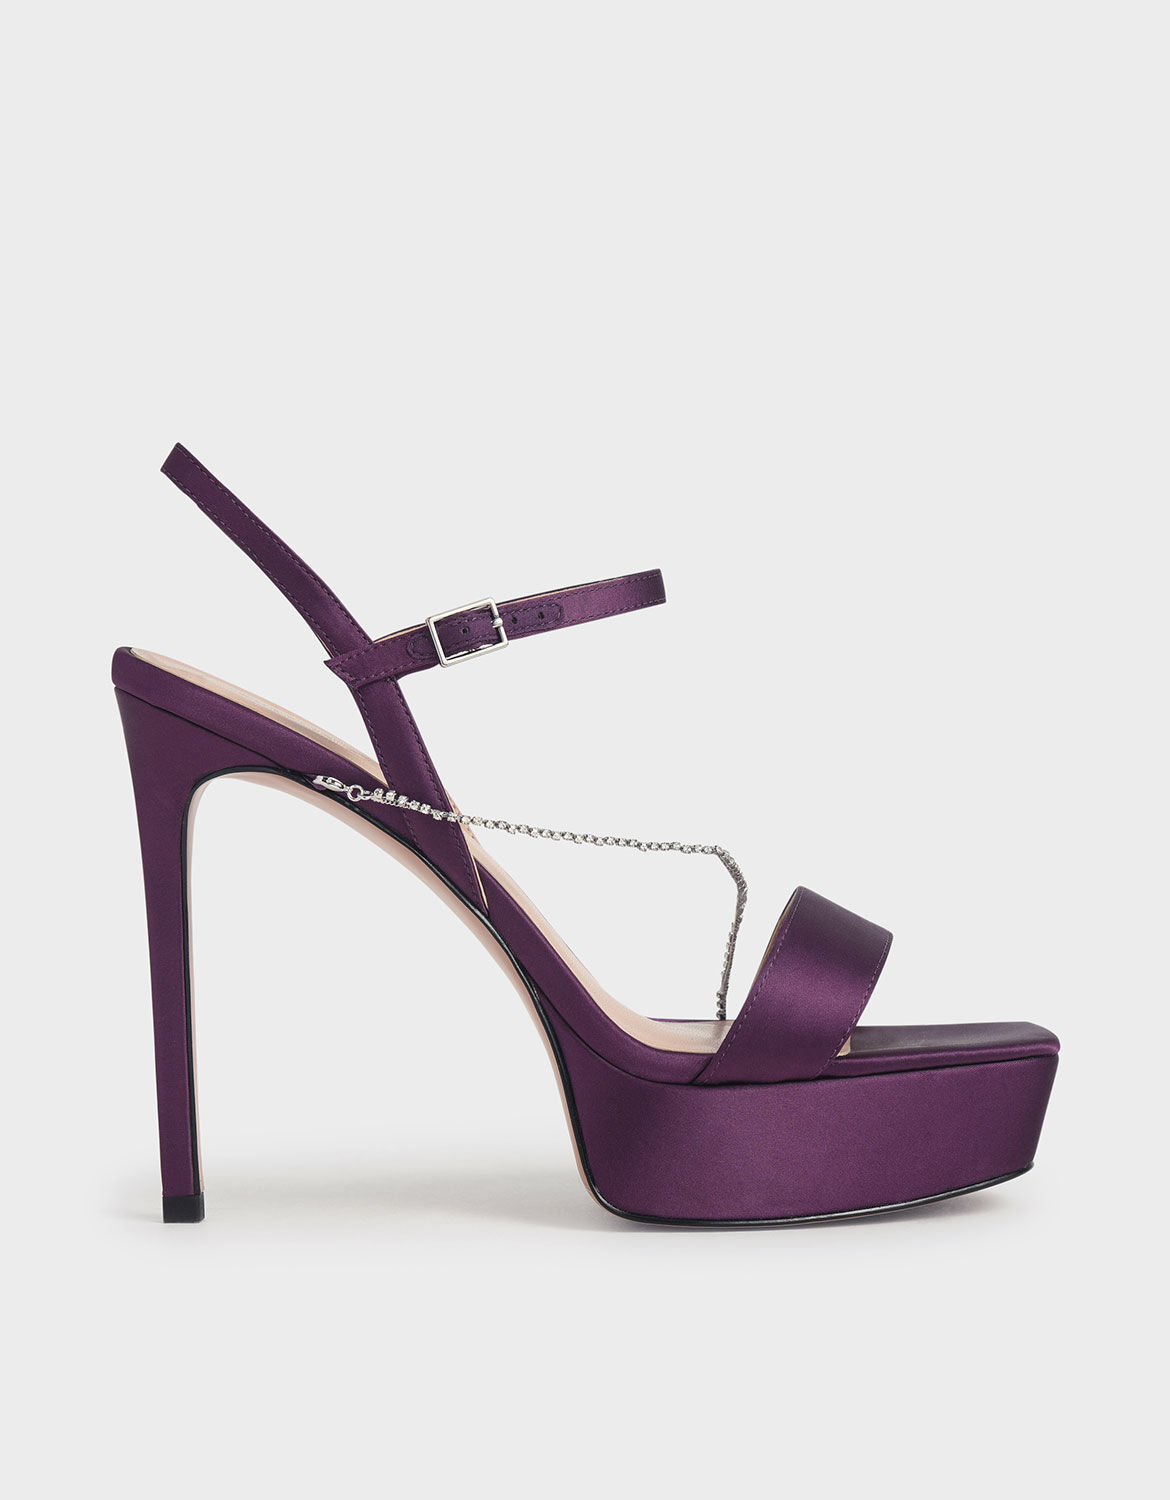 satin purple heels